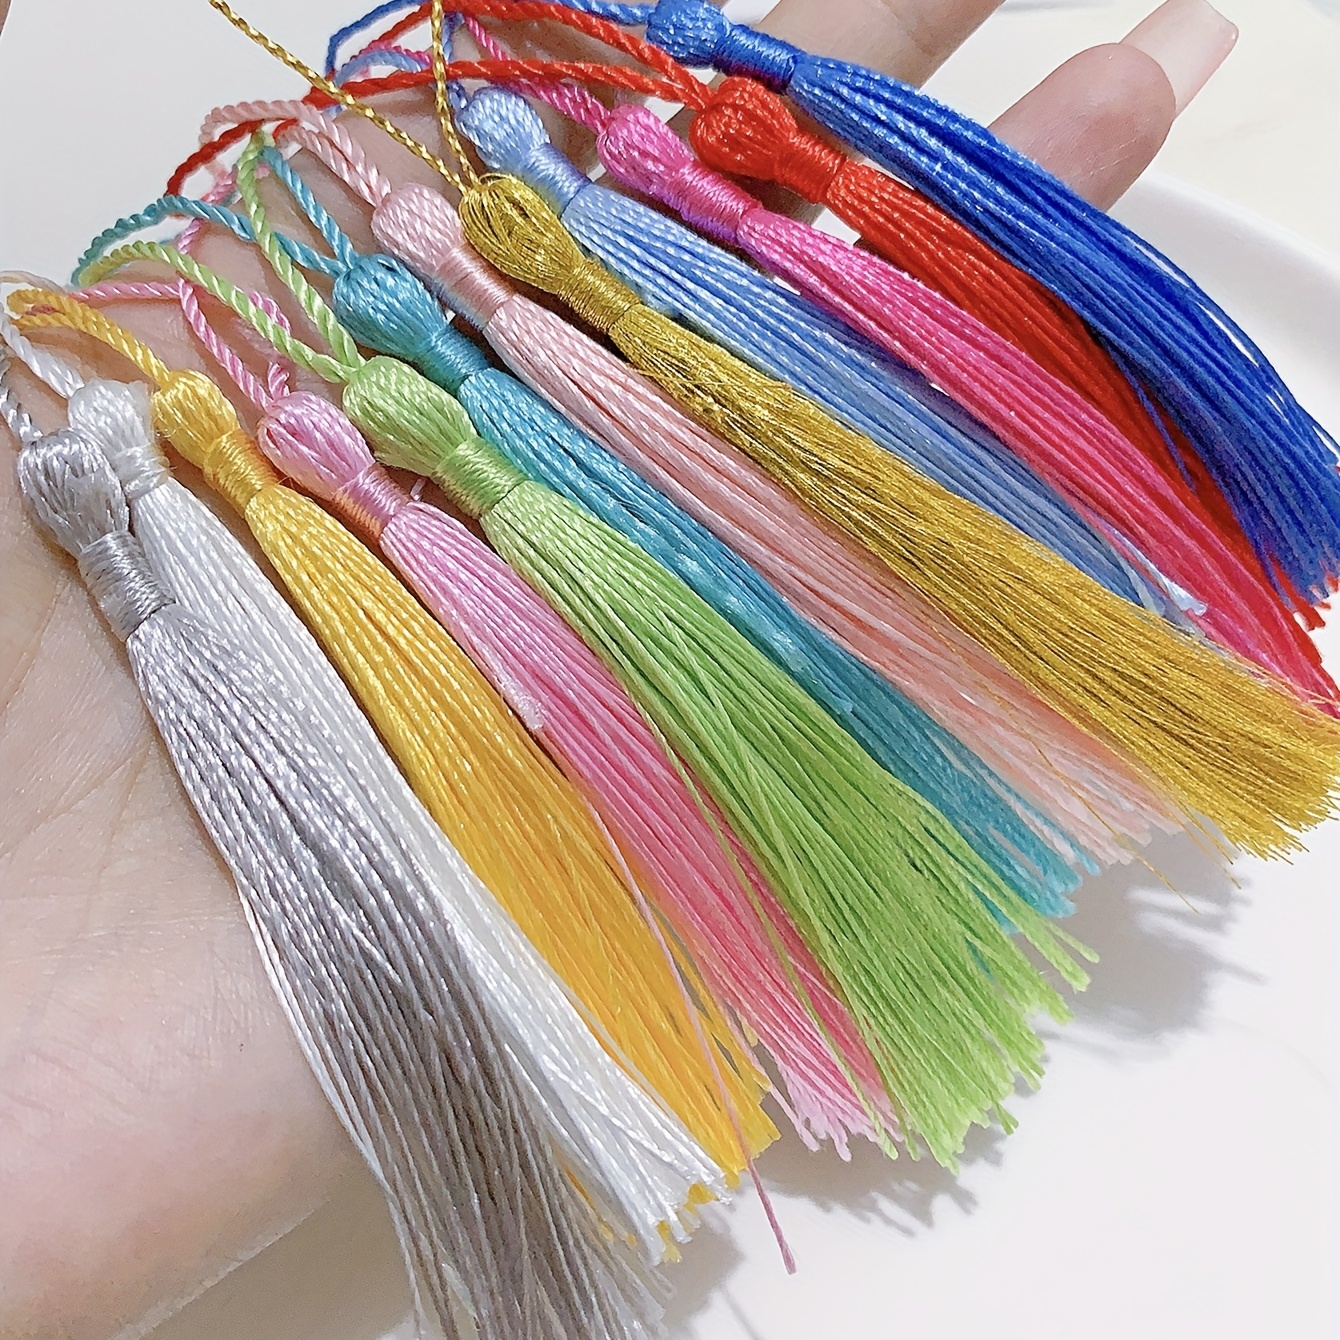 Cridoz cridoz Tassels, 120Pcs Bookmark Tassels Silky Handmade Soft Craft  Mini Tassels with Loops for Bookmarks, Crafts and Jewelry